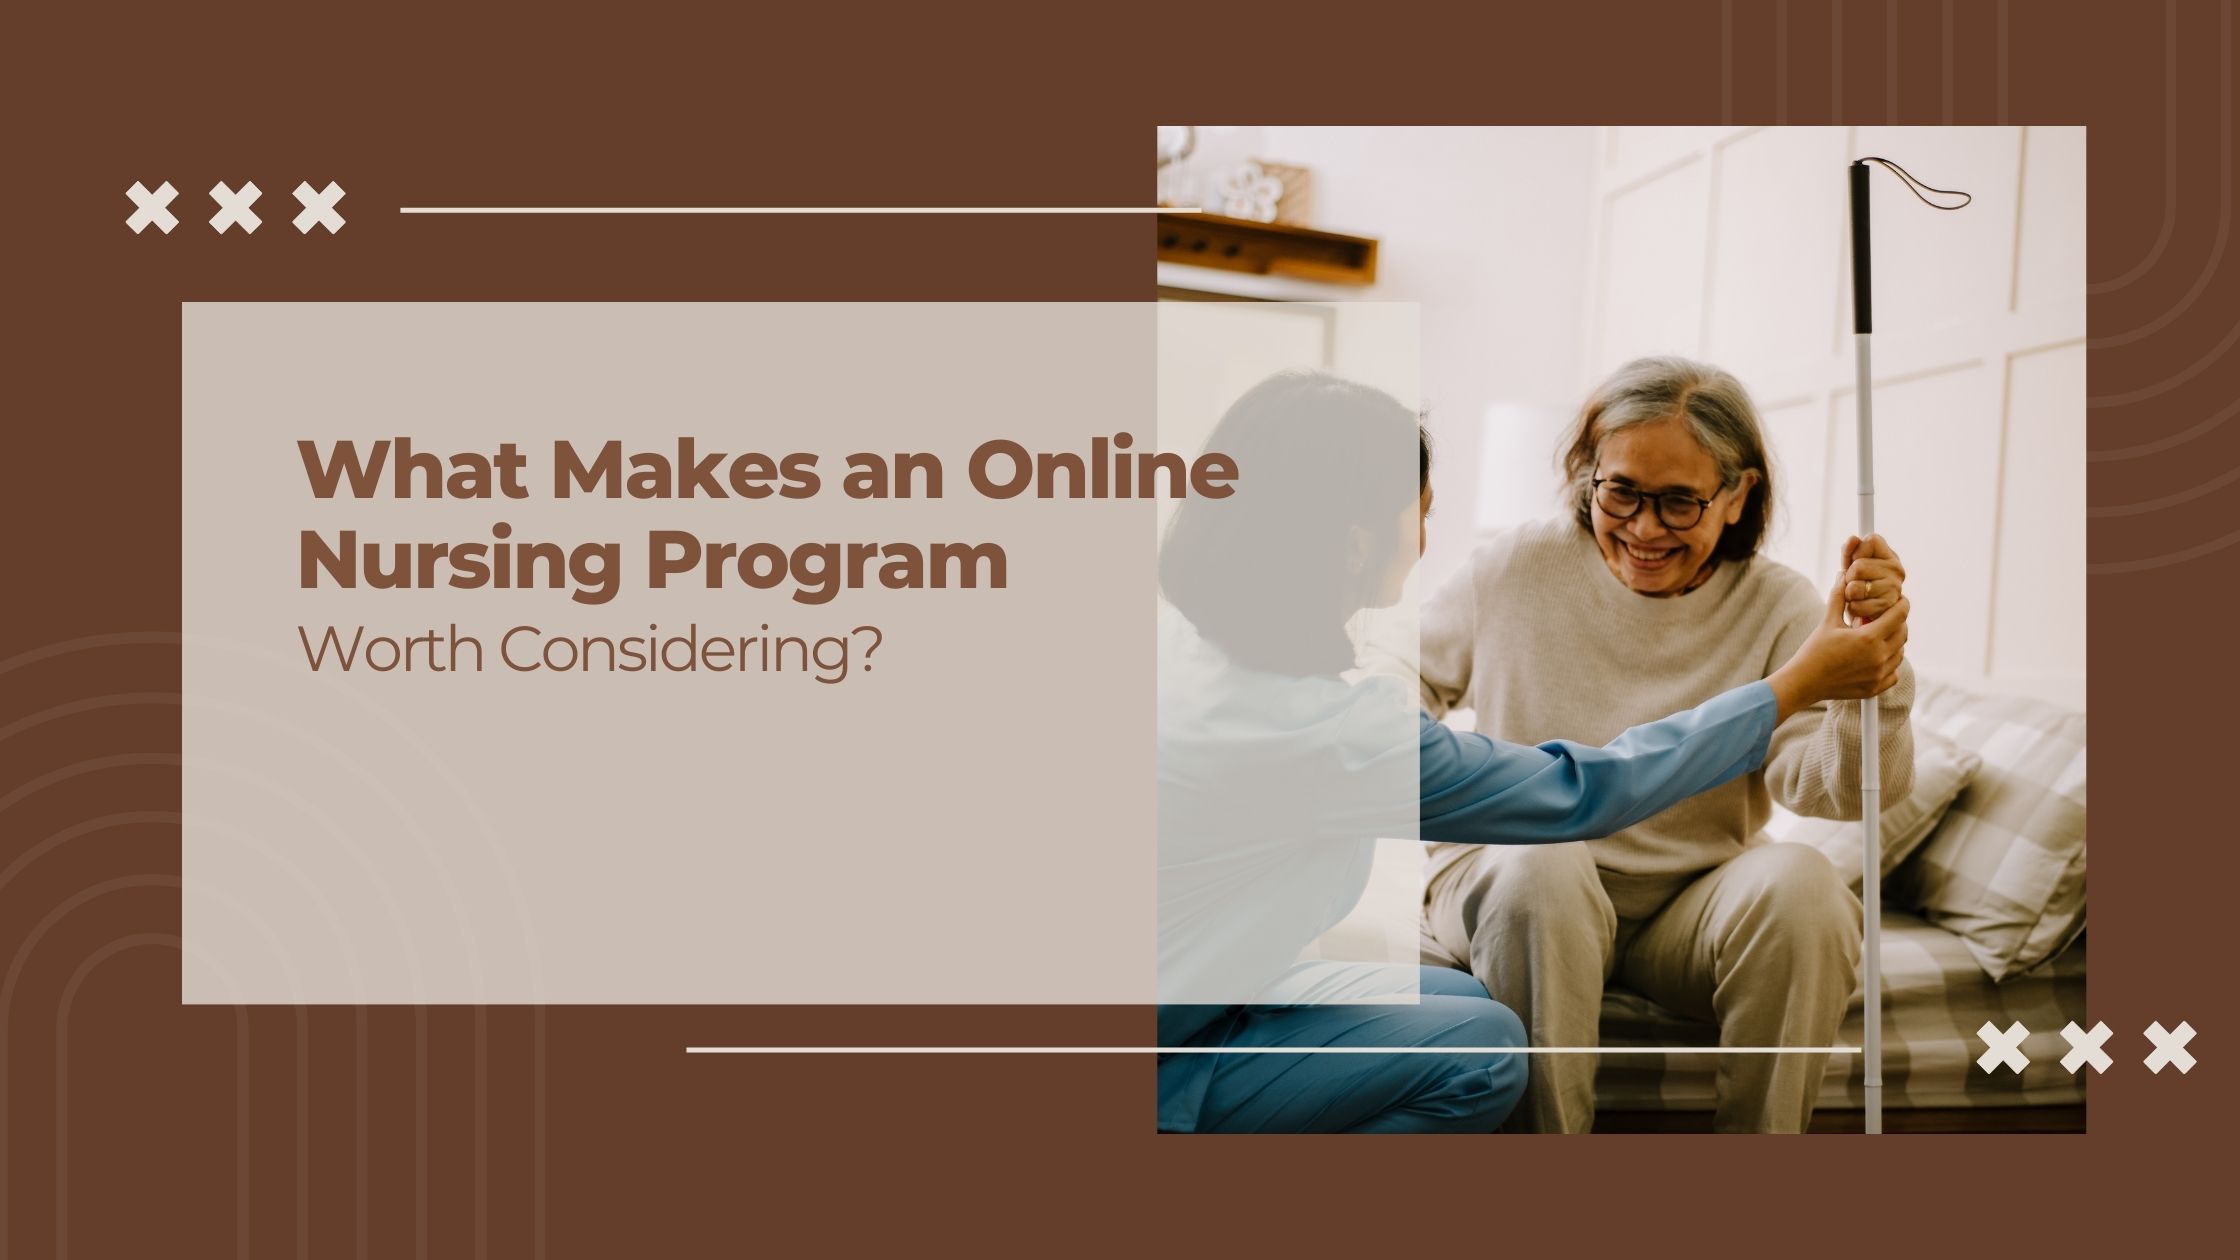 What Makes an Online Nursing Program Worth Considering?